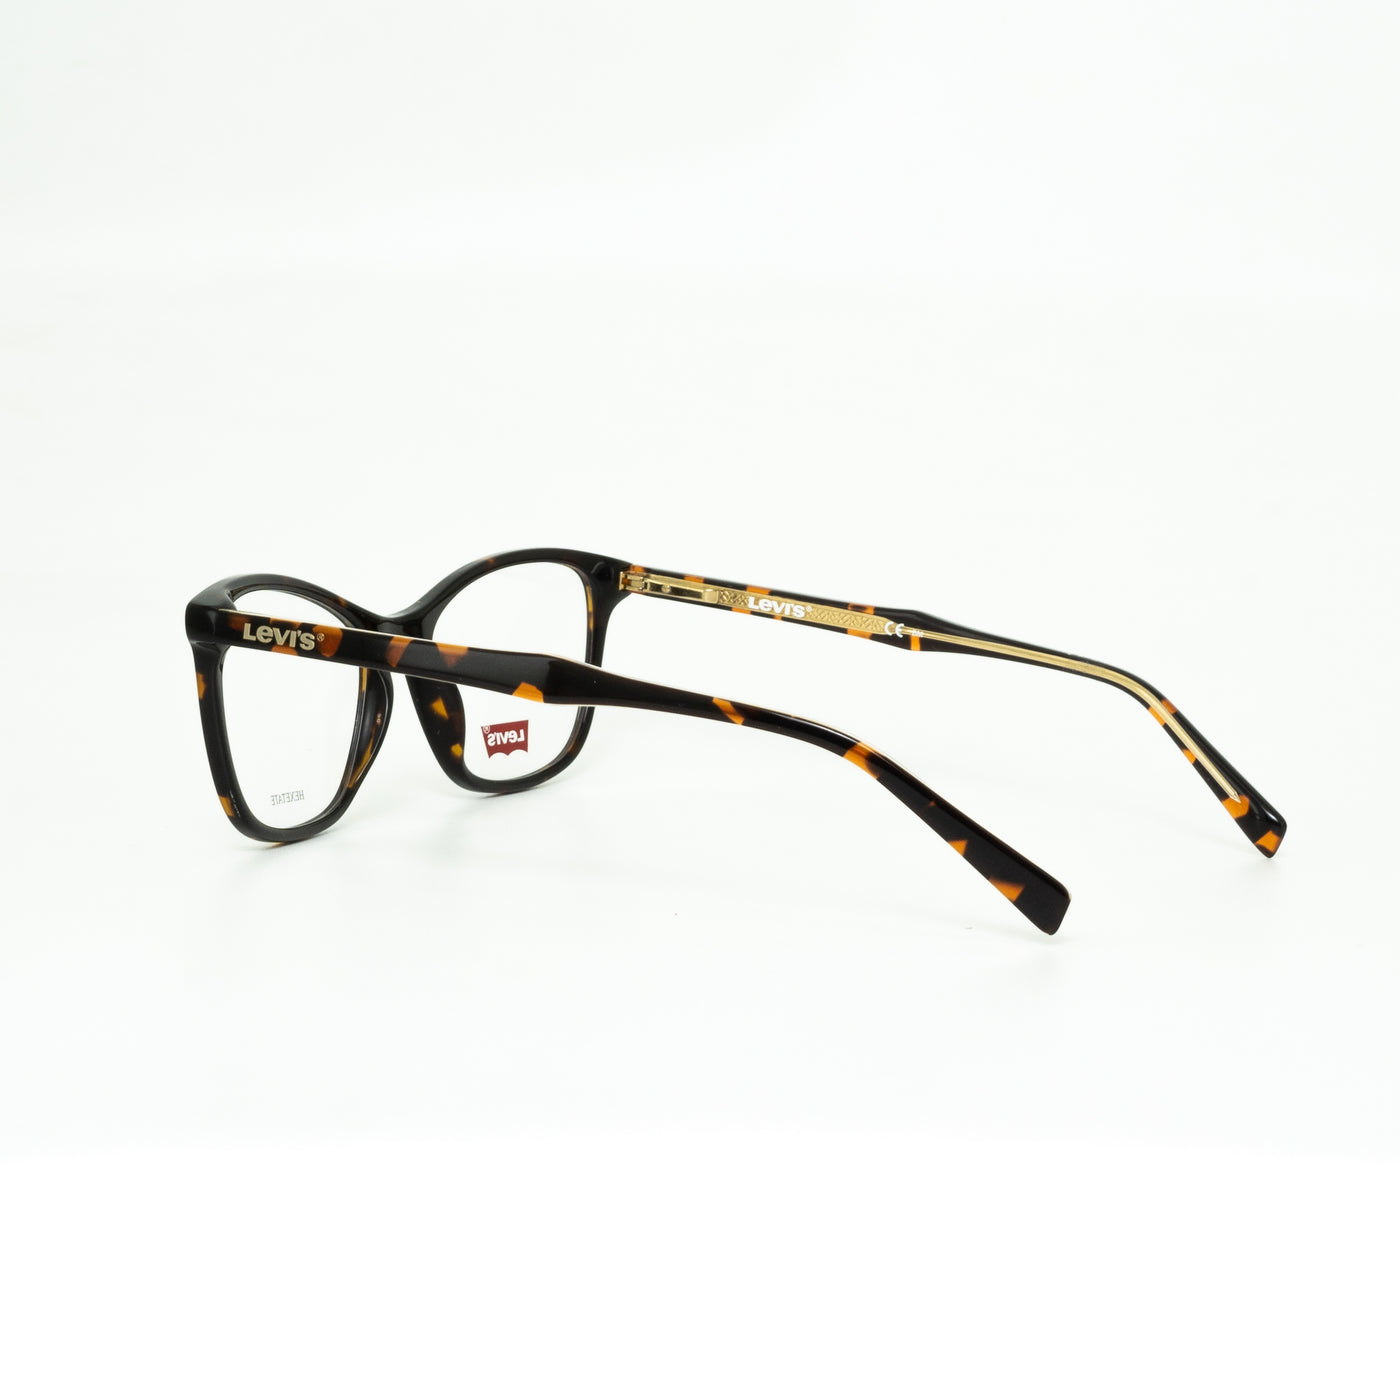 Levis LS501708653 | Eyeglasses - Vision Express Optical Philippines